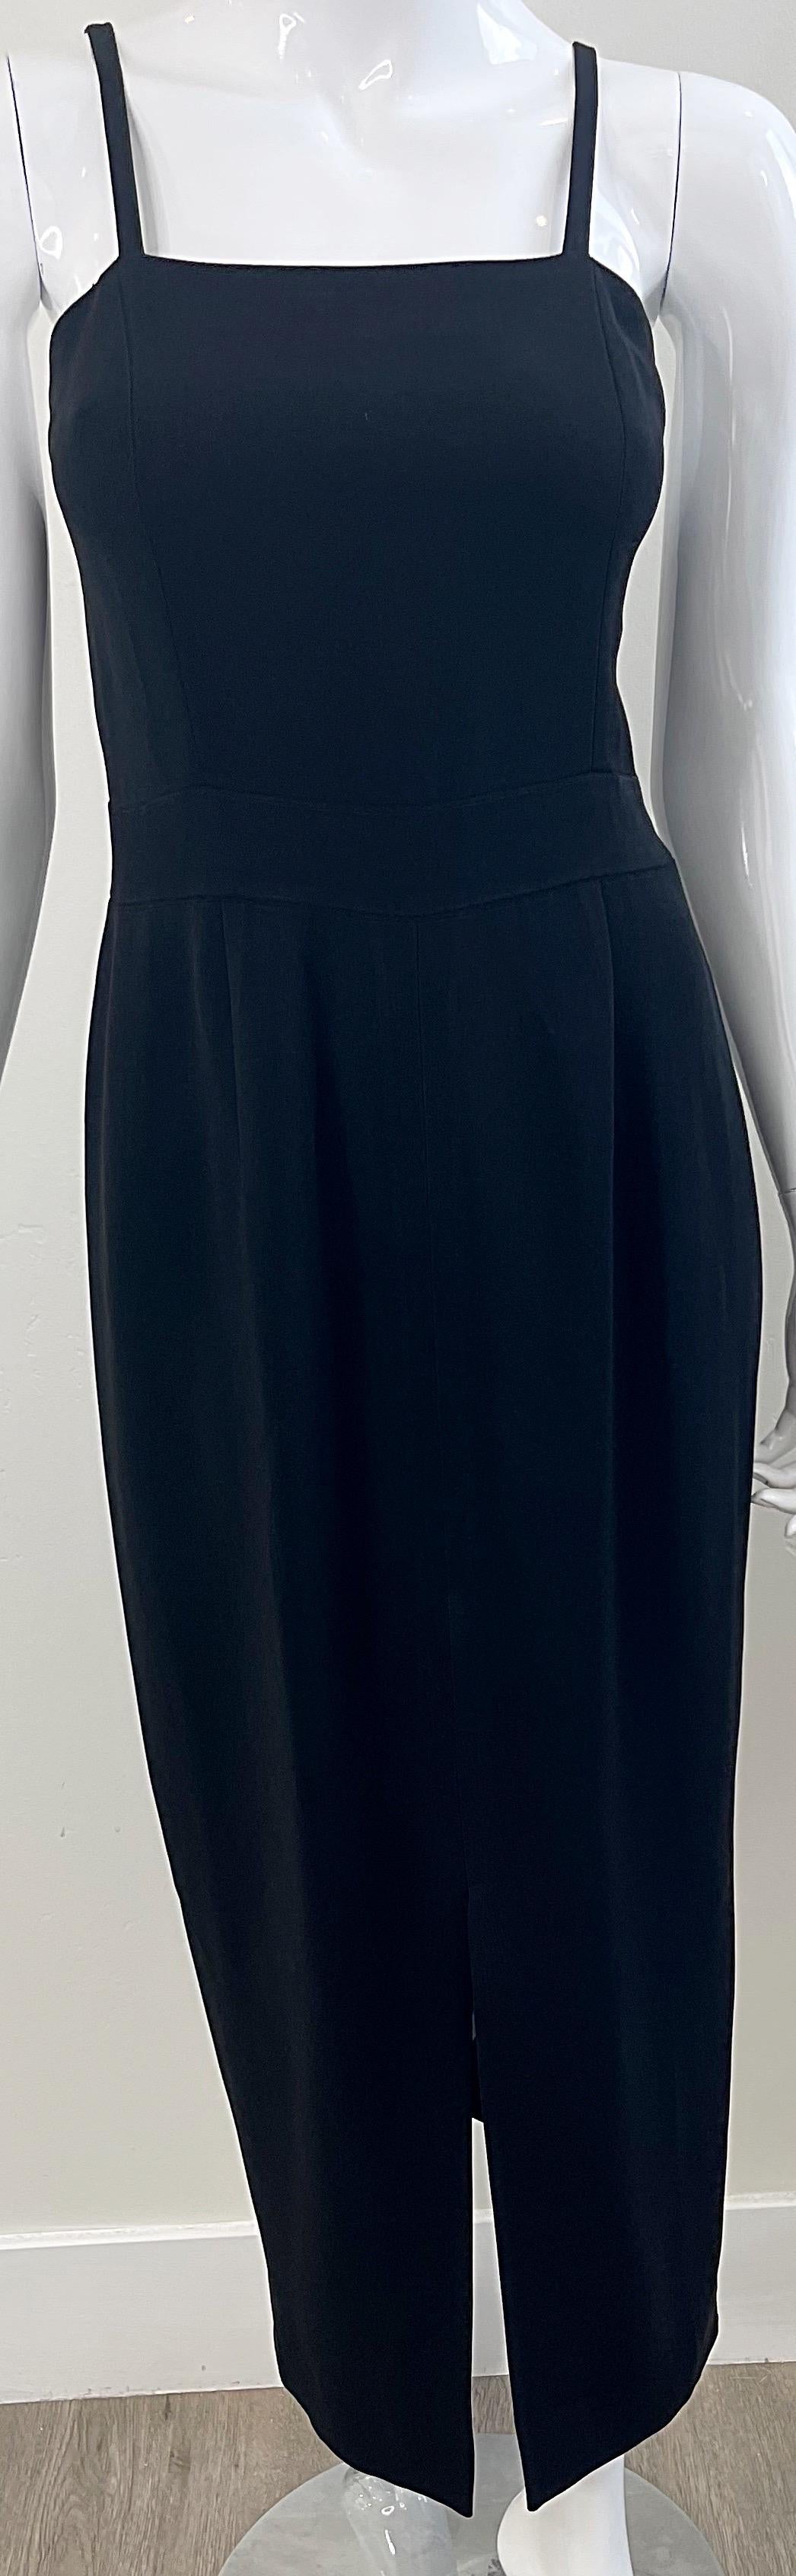 Karl Lagerfeld 1990s Black Sleeveless Timeless Black Vintage 90s Gown Maxi Dress For Sale 6